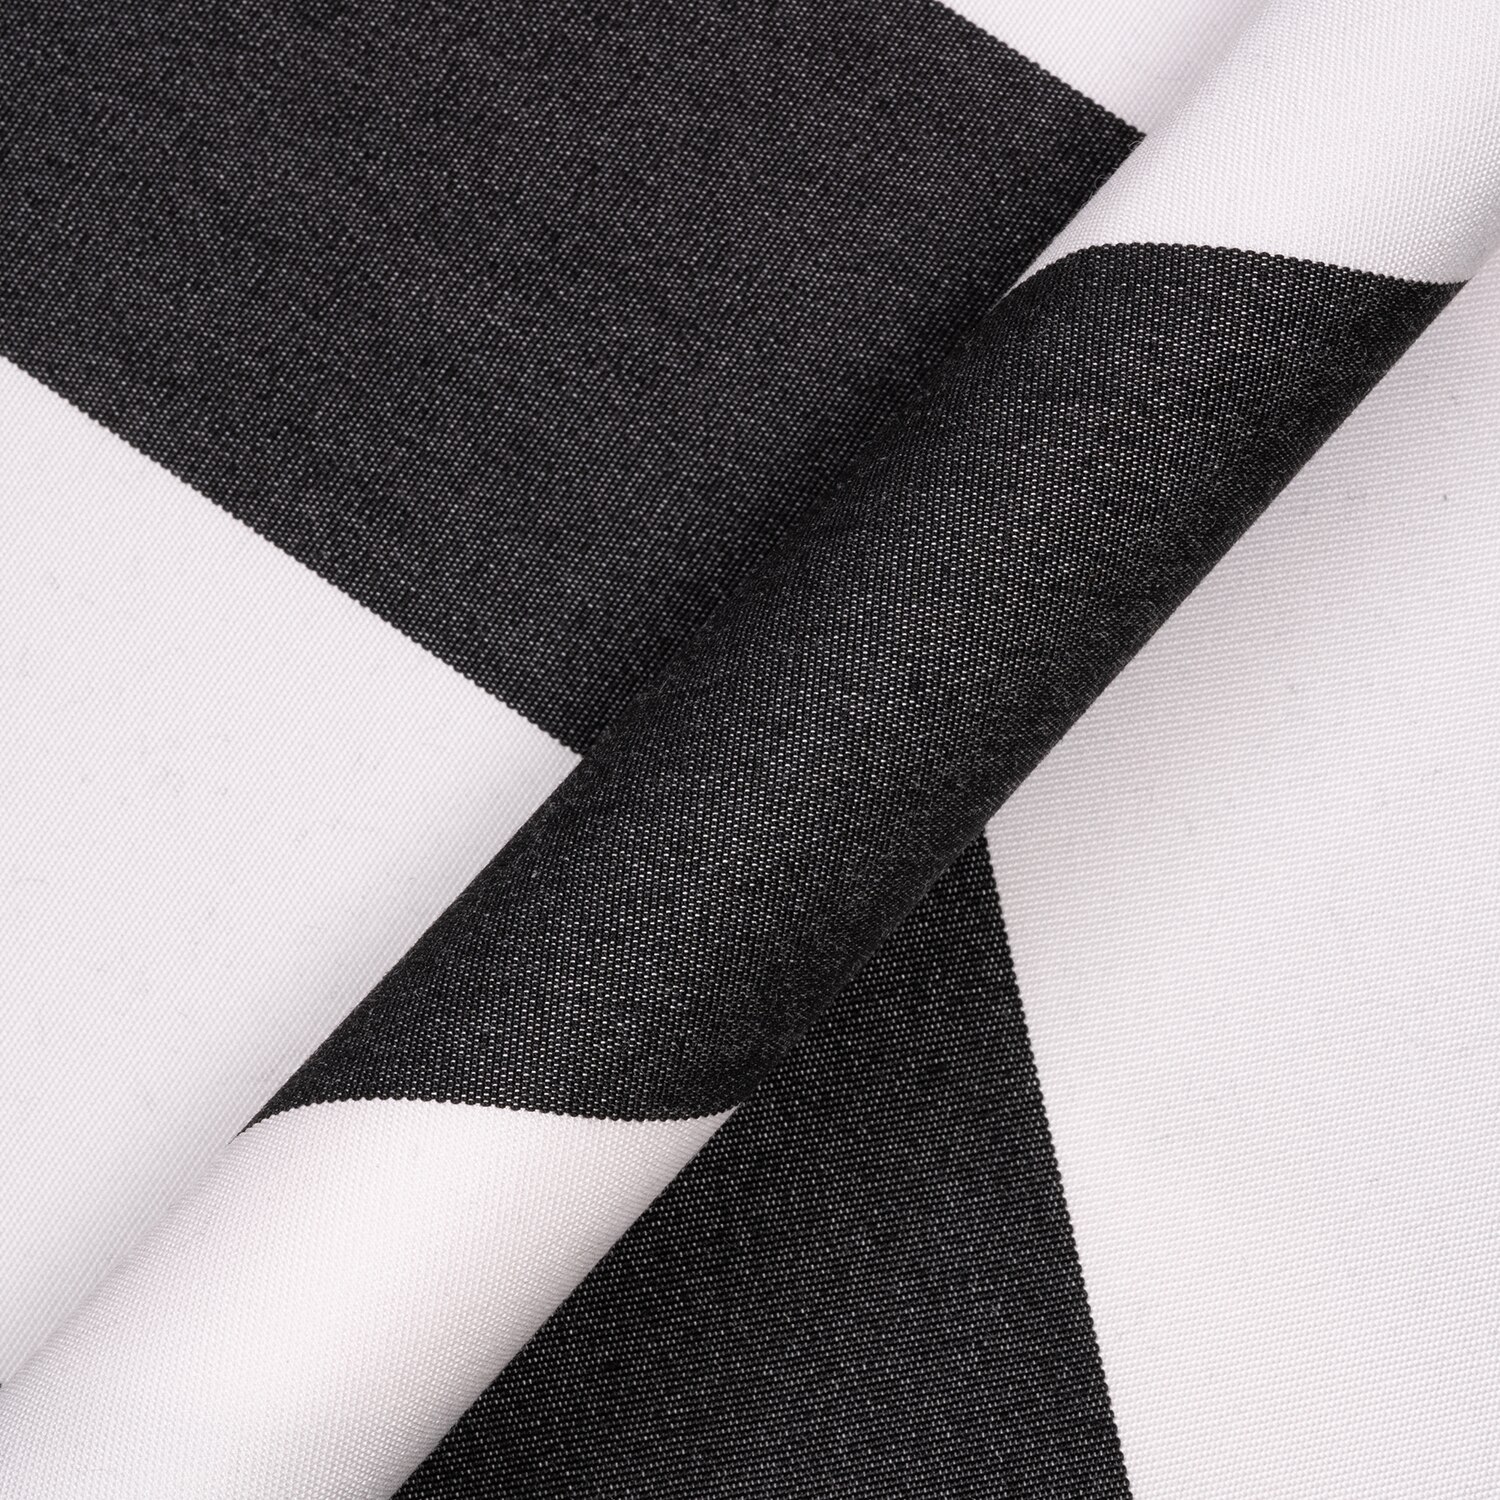 Canopy Stripe Black/White Sunbrella Performance Fabric by The Yard - Ballard Designs